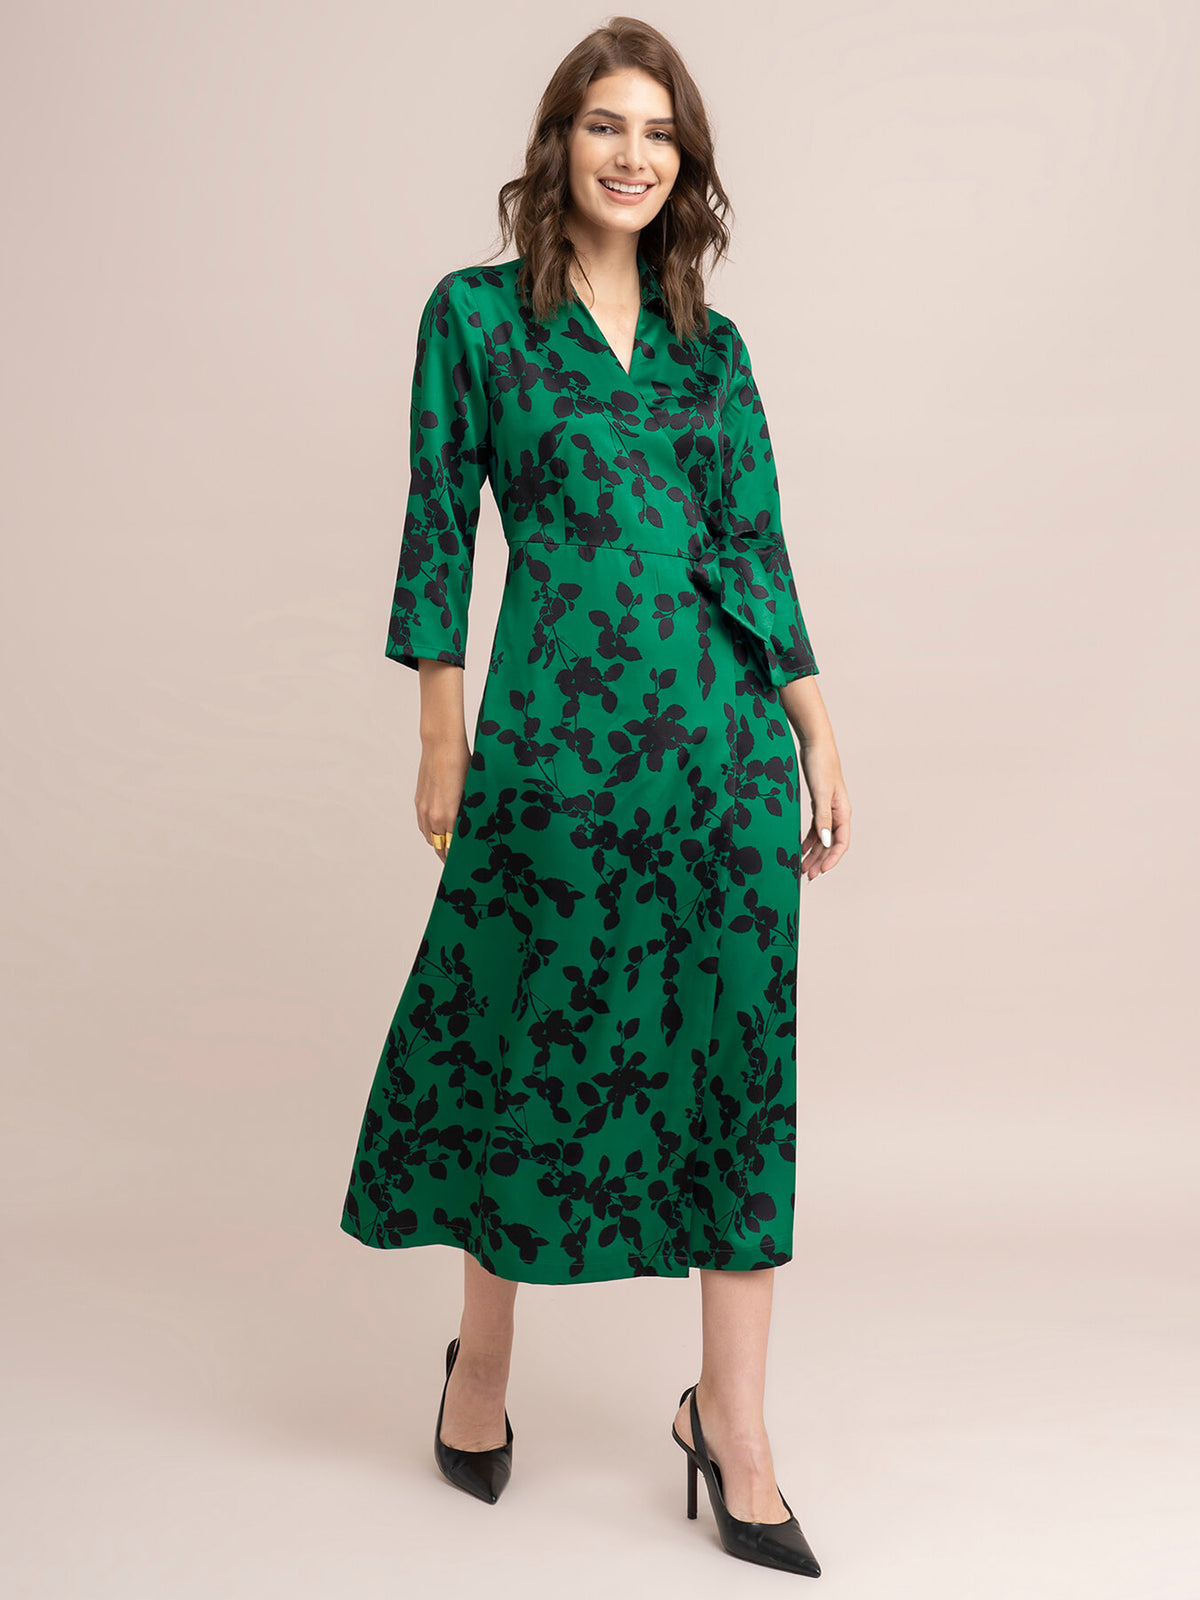 Satin Floral Print Wrap Dress - Green And Black